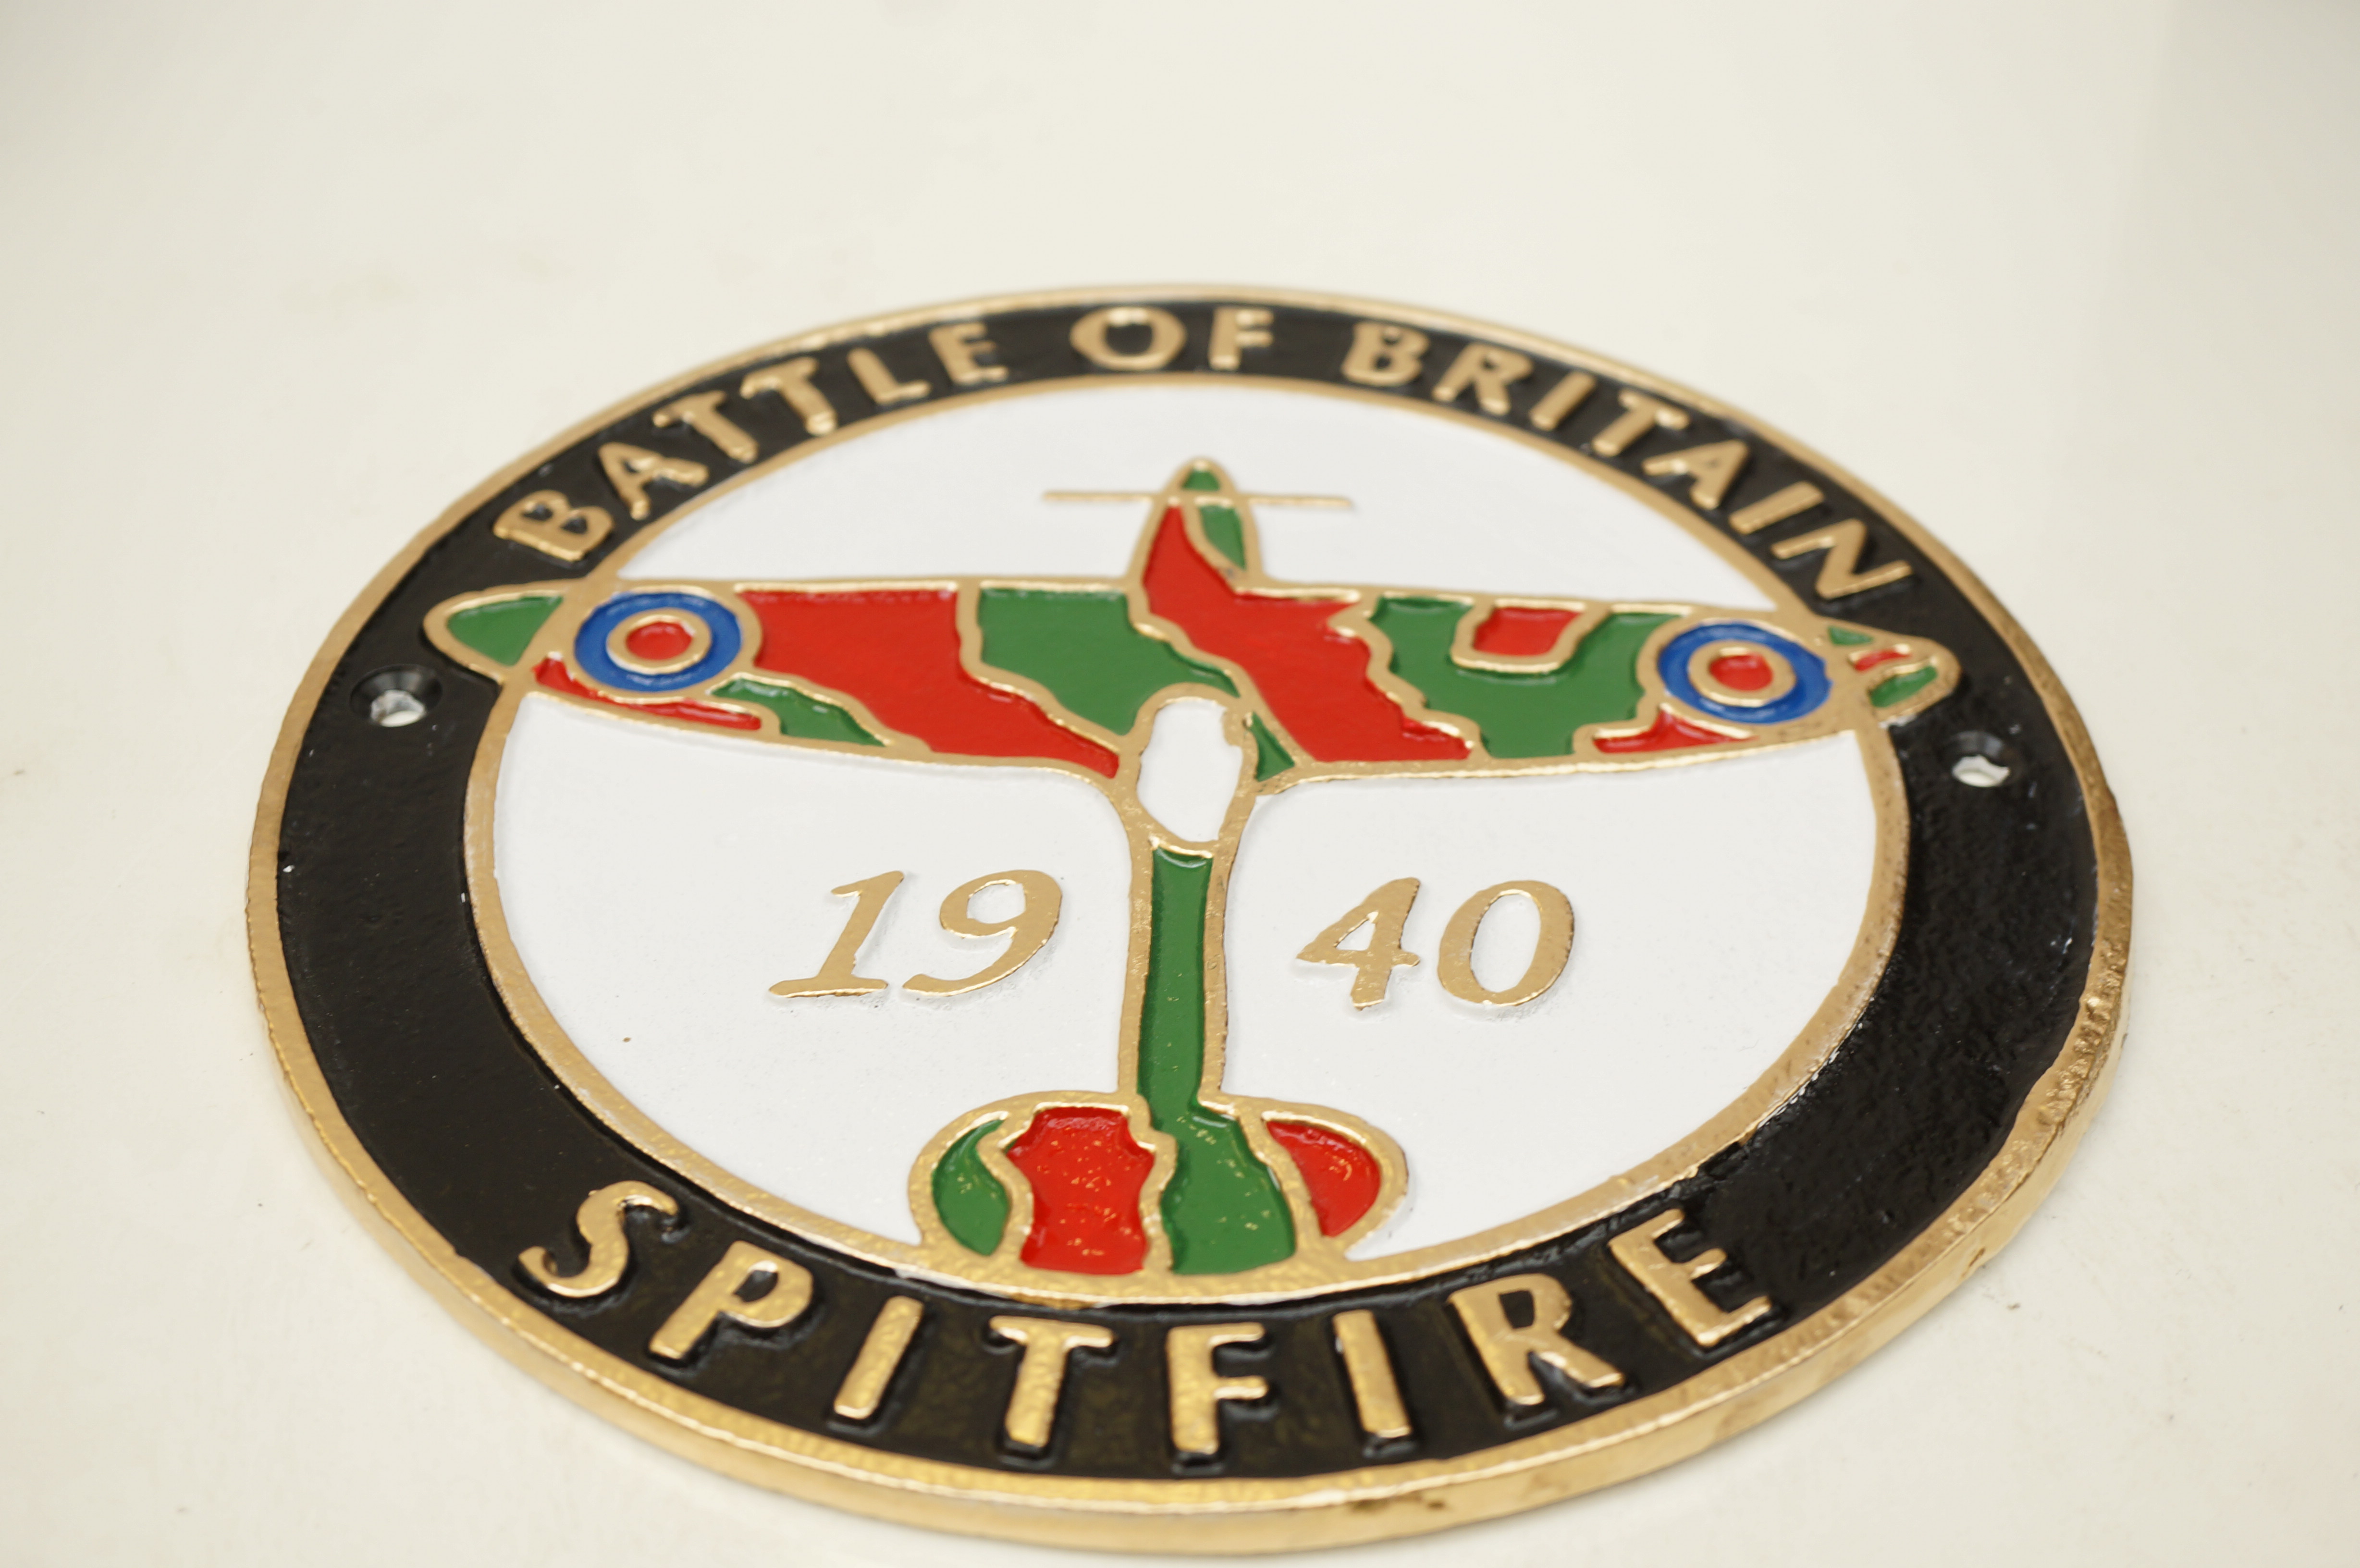 Cast iron sign battle of Britain (spirfire)